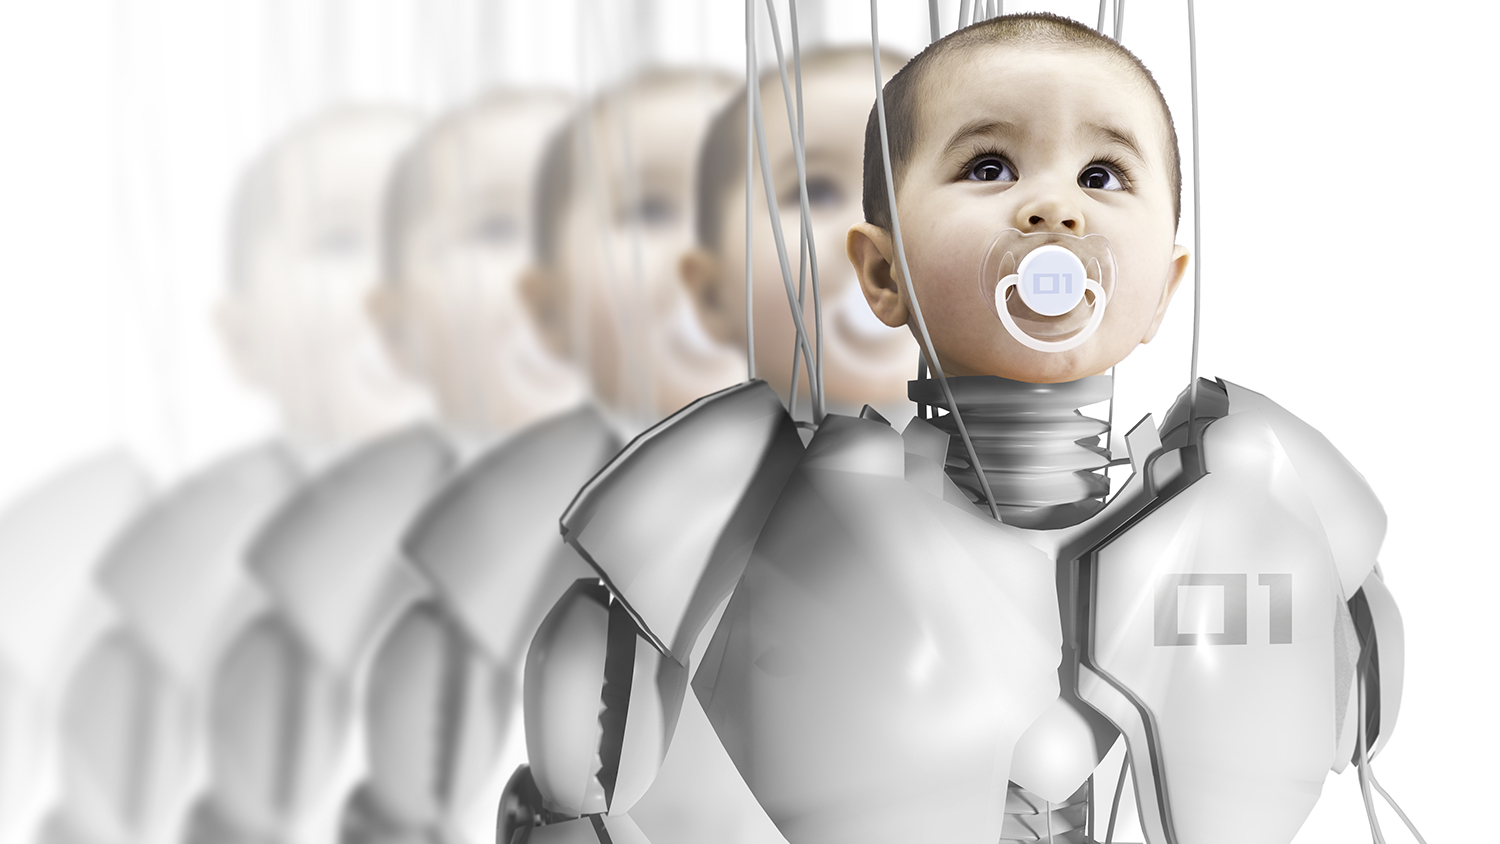 Child robot, creating clones, genetic engineering